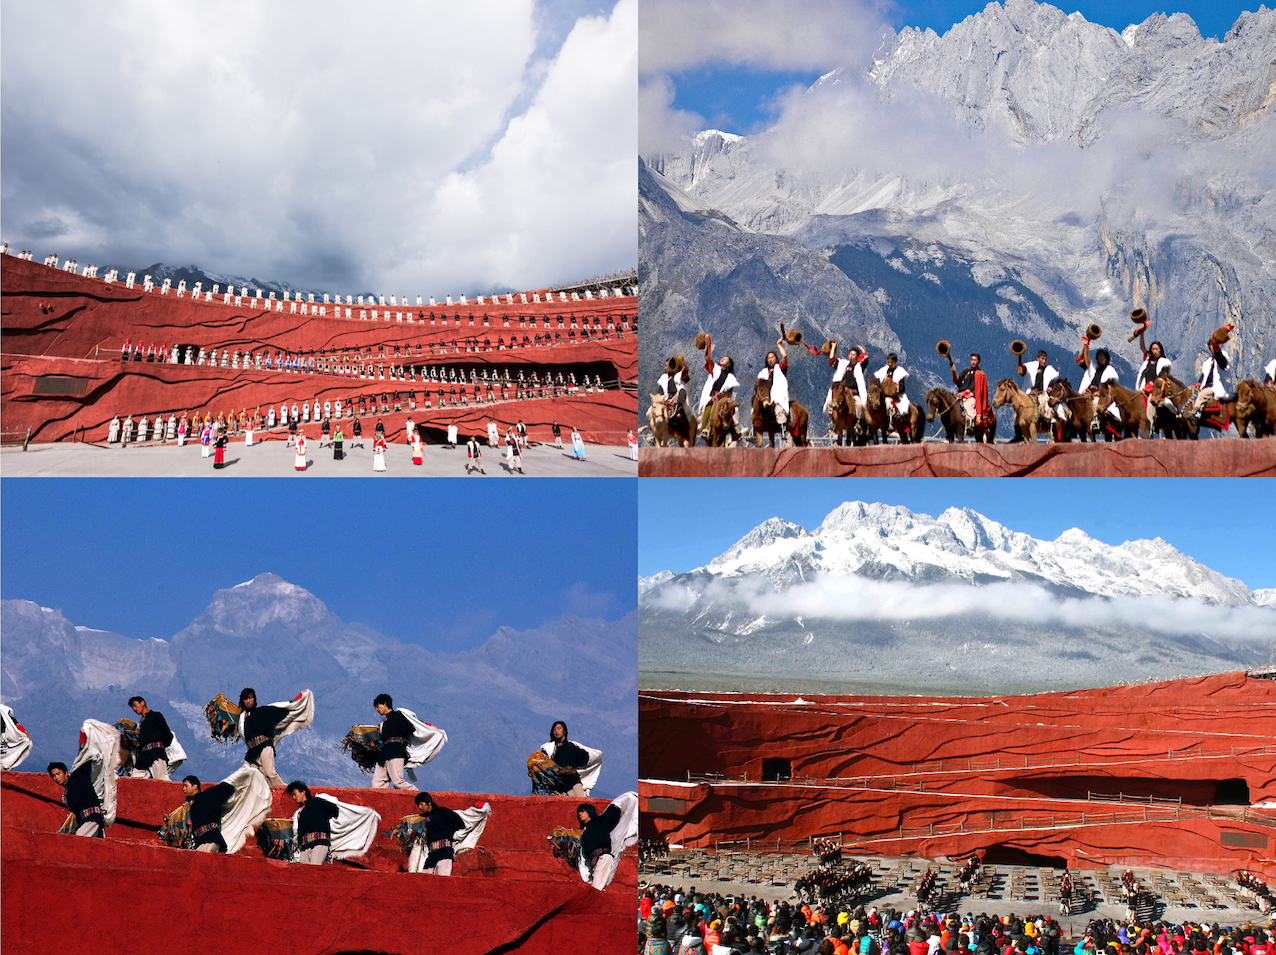 Impressive Lijiang show